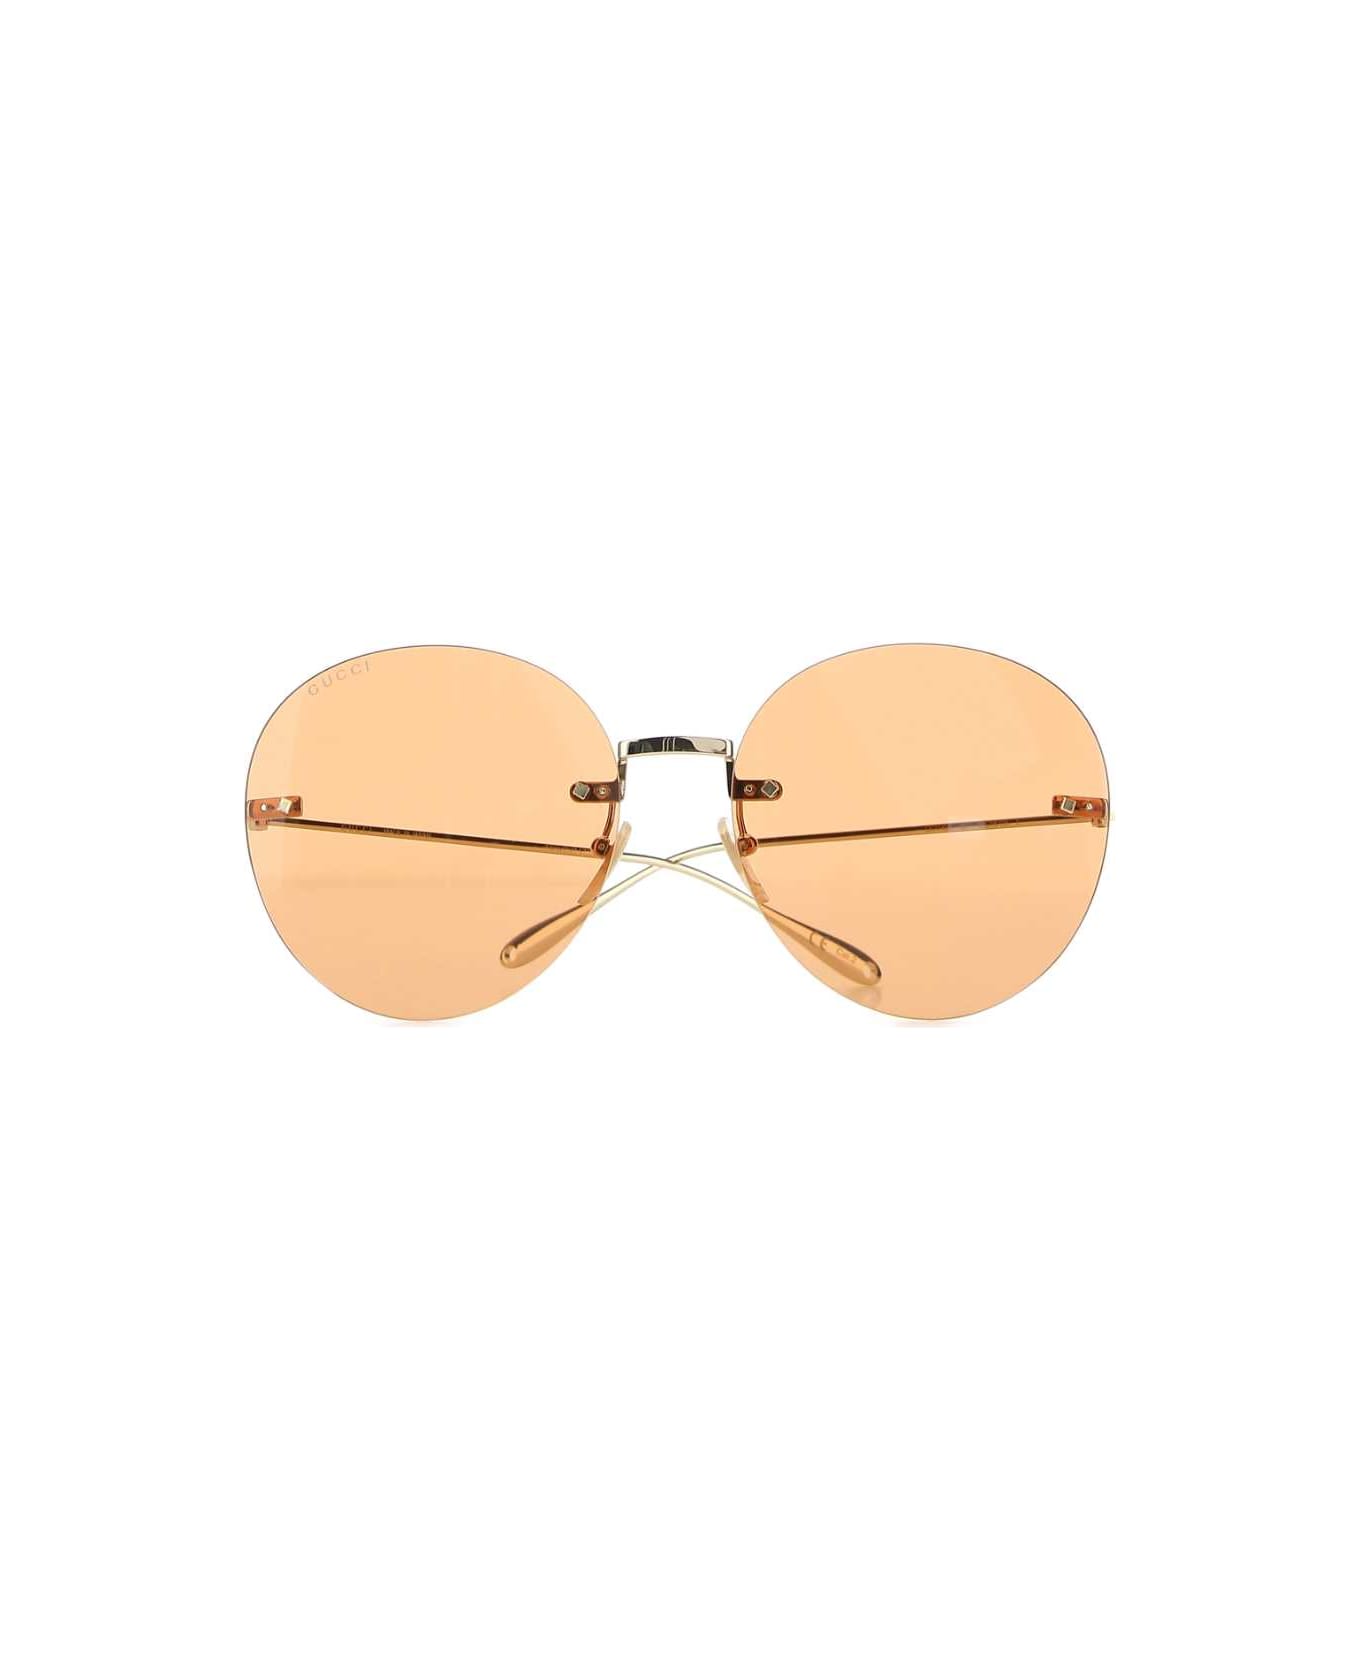 Gucci Gold Metal Sunglasses - 8075